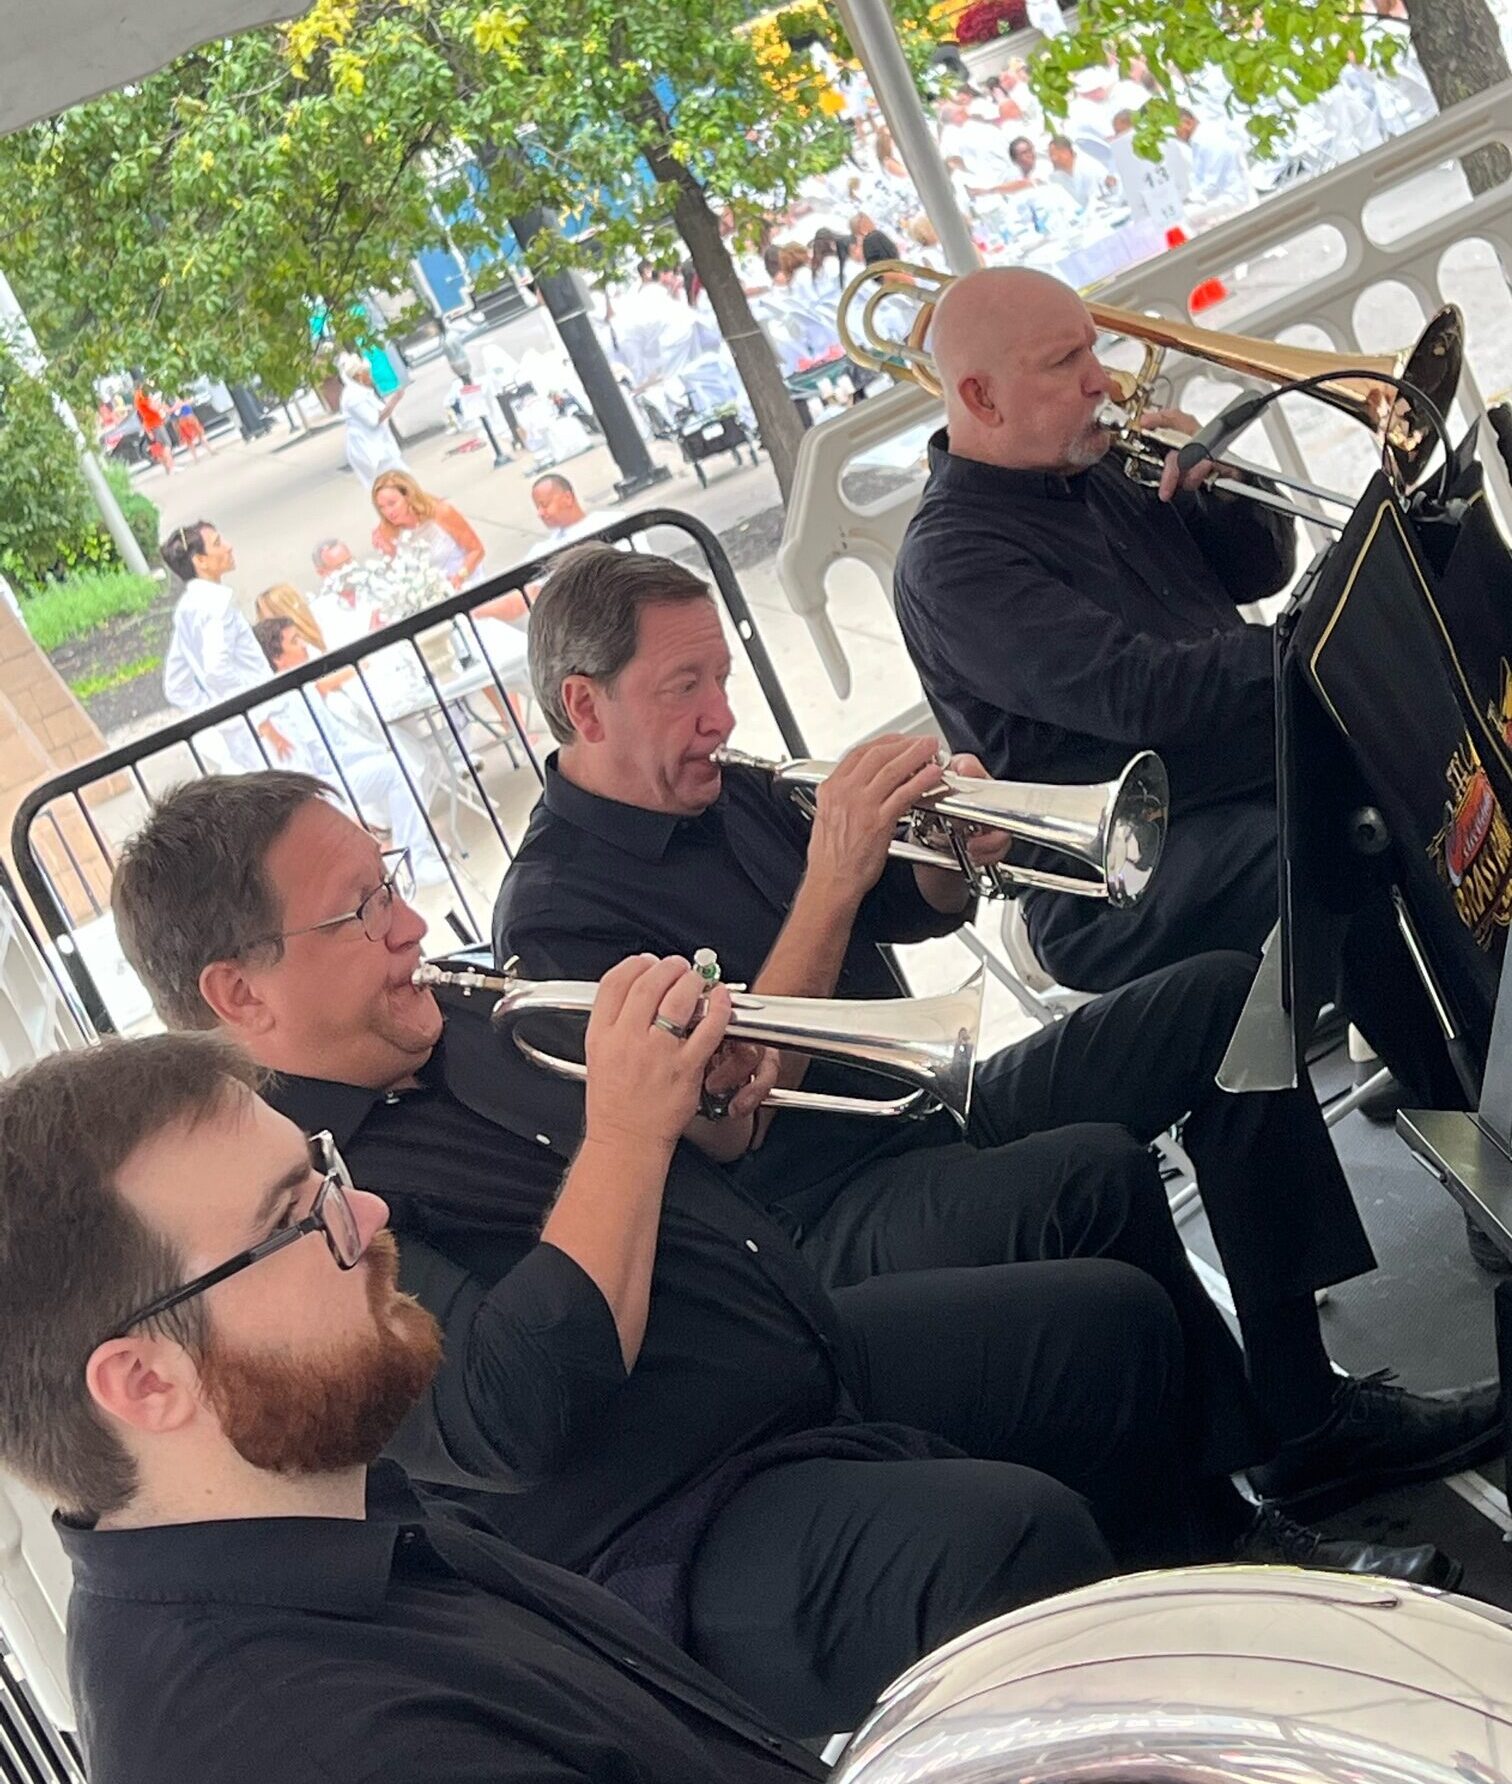 Cincinnati Brass Band flugel horn players performing at Diner en Blanc